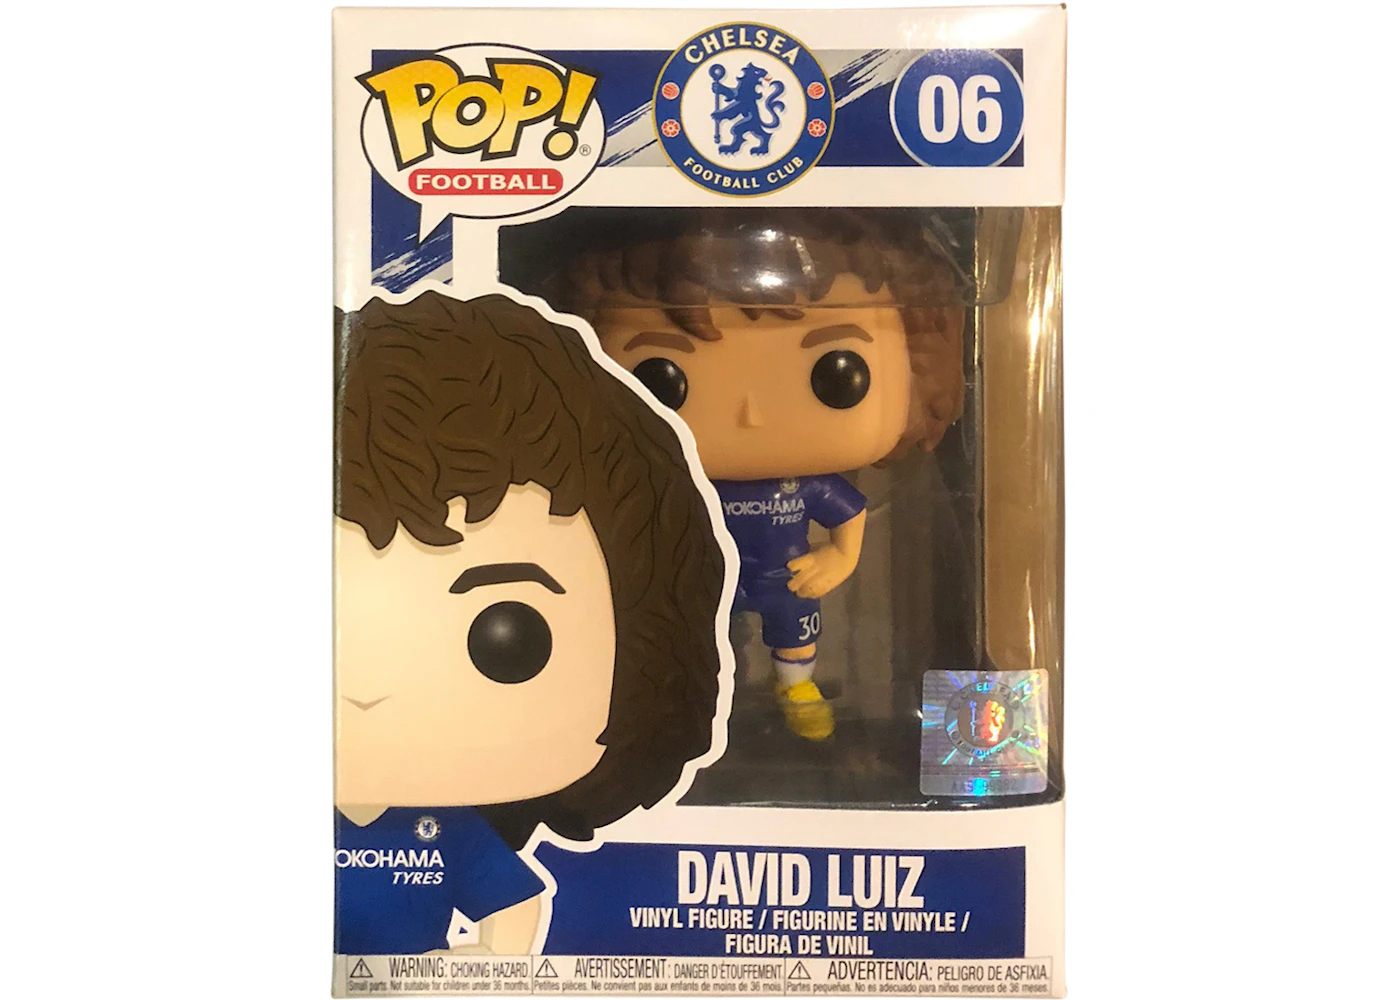 Funko Pop! Football Chelsea Football Club David Luiz Figure #06 - GB